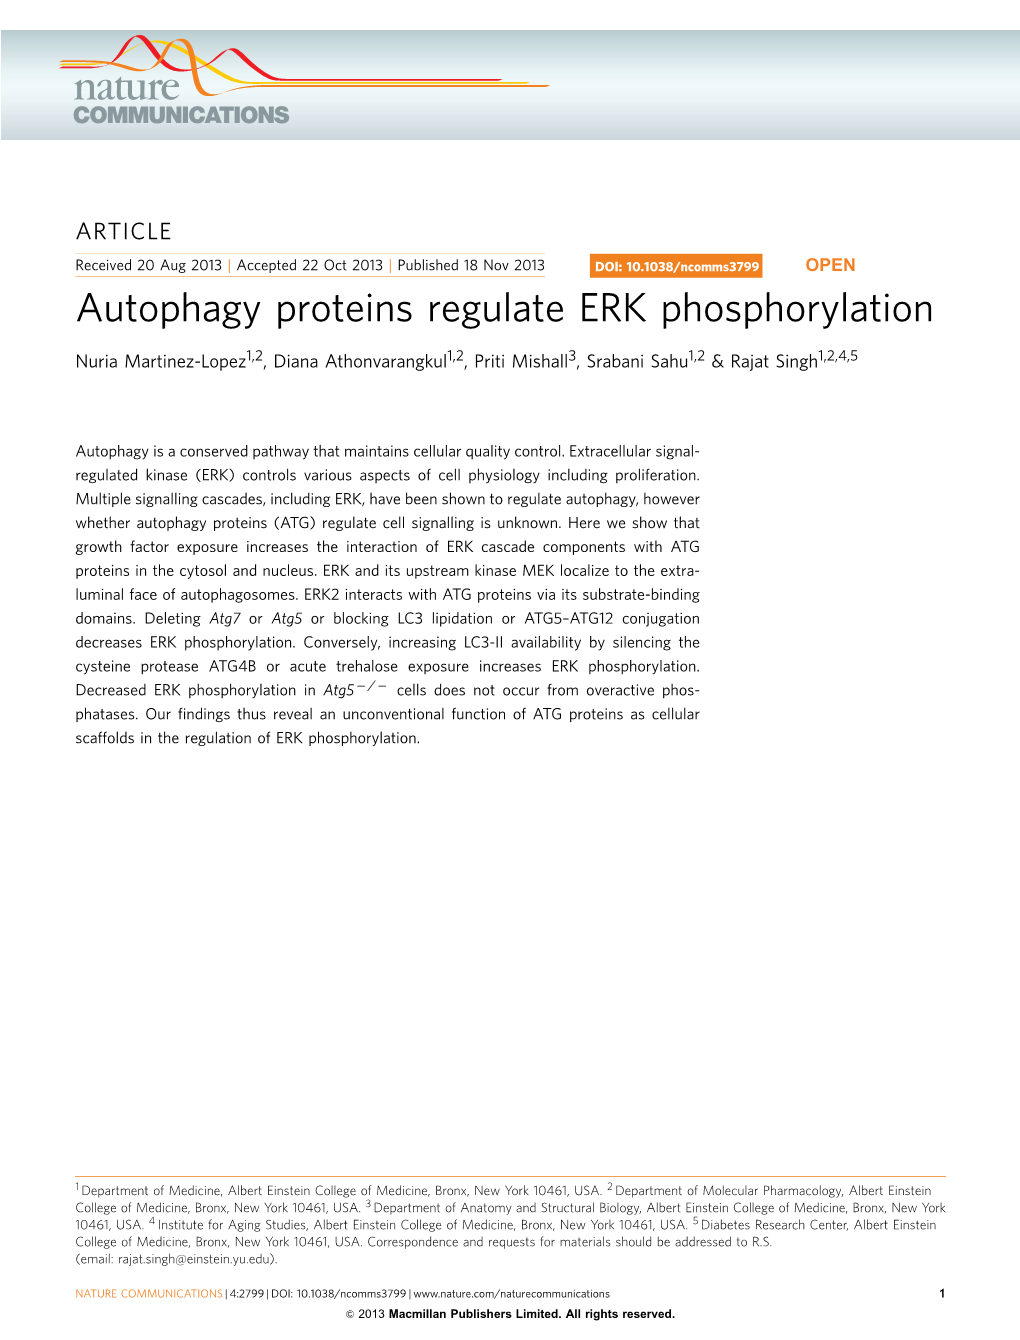 Autophagy Proteins Regulate ERK Phosphorylation